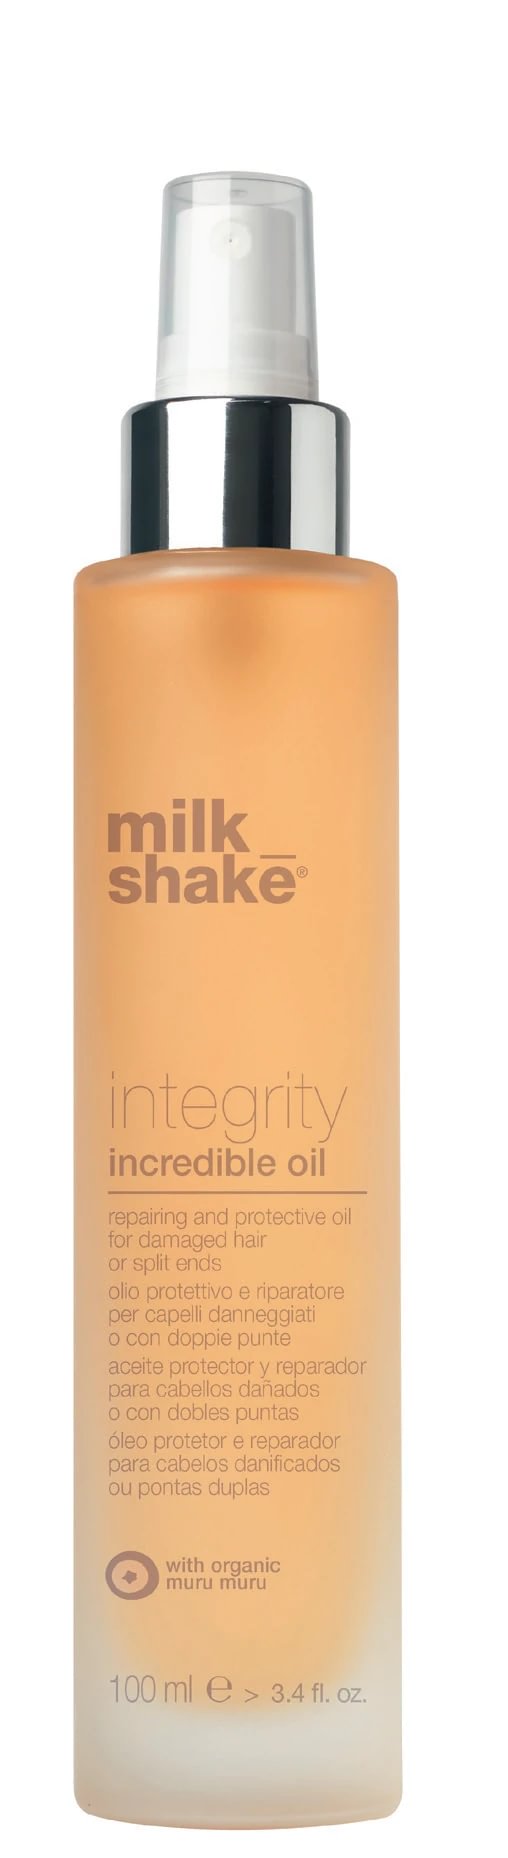 Milk_Shake Integrity Невероятное масло 100мл